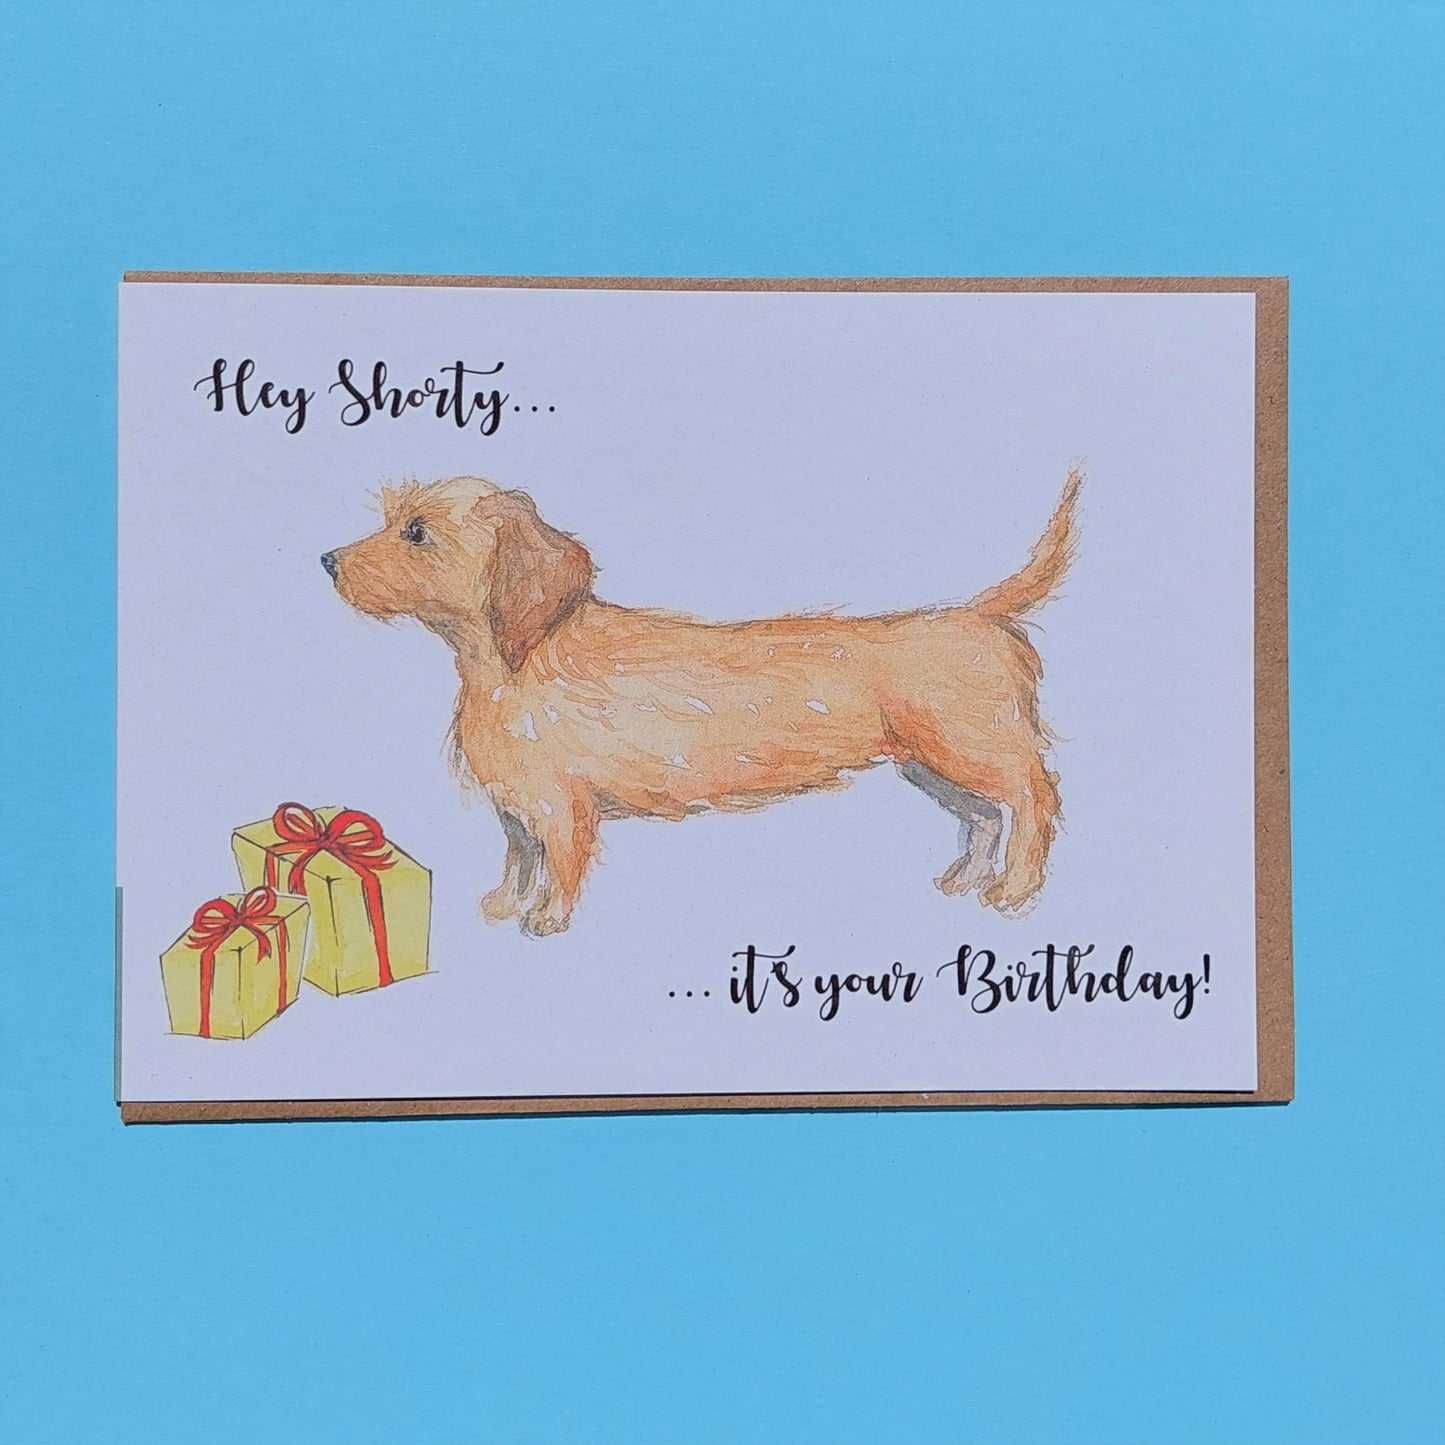 Hey Shorty Birthday Card